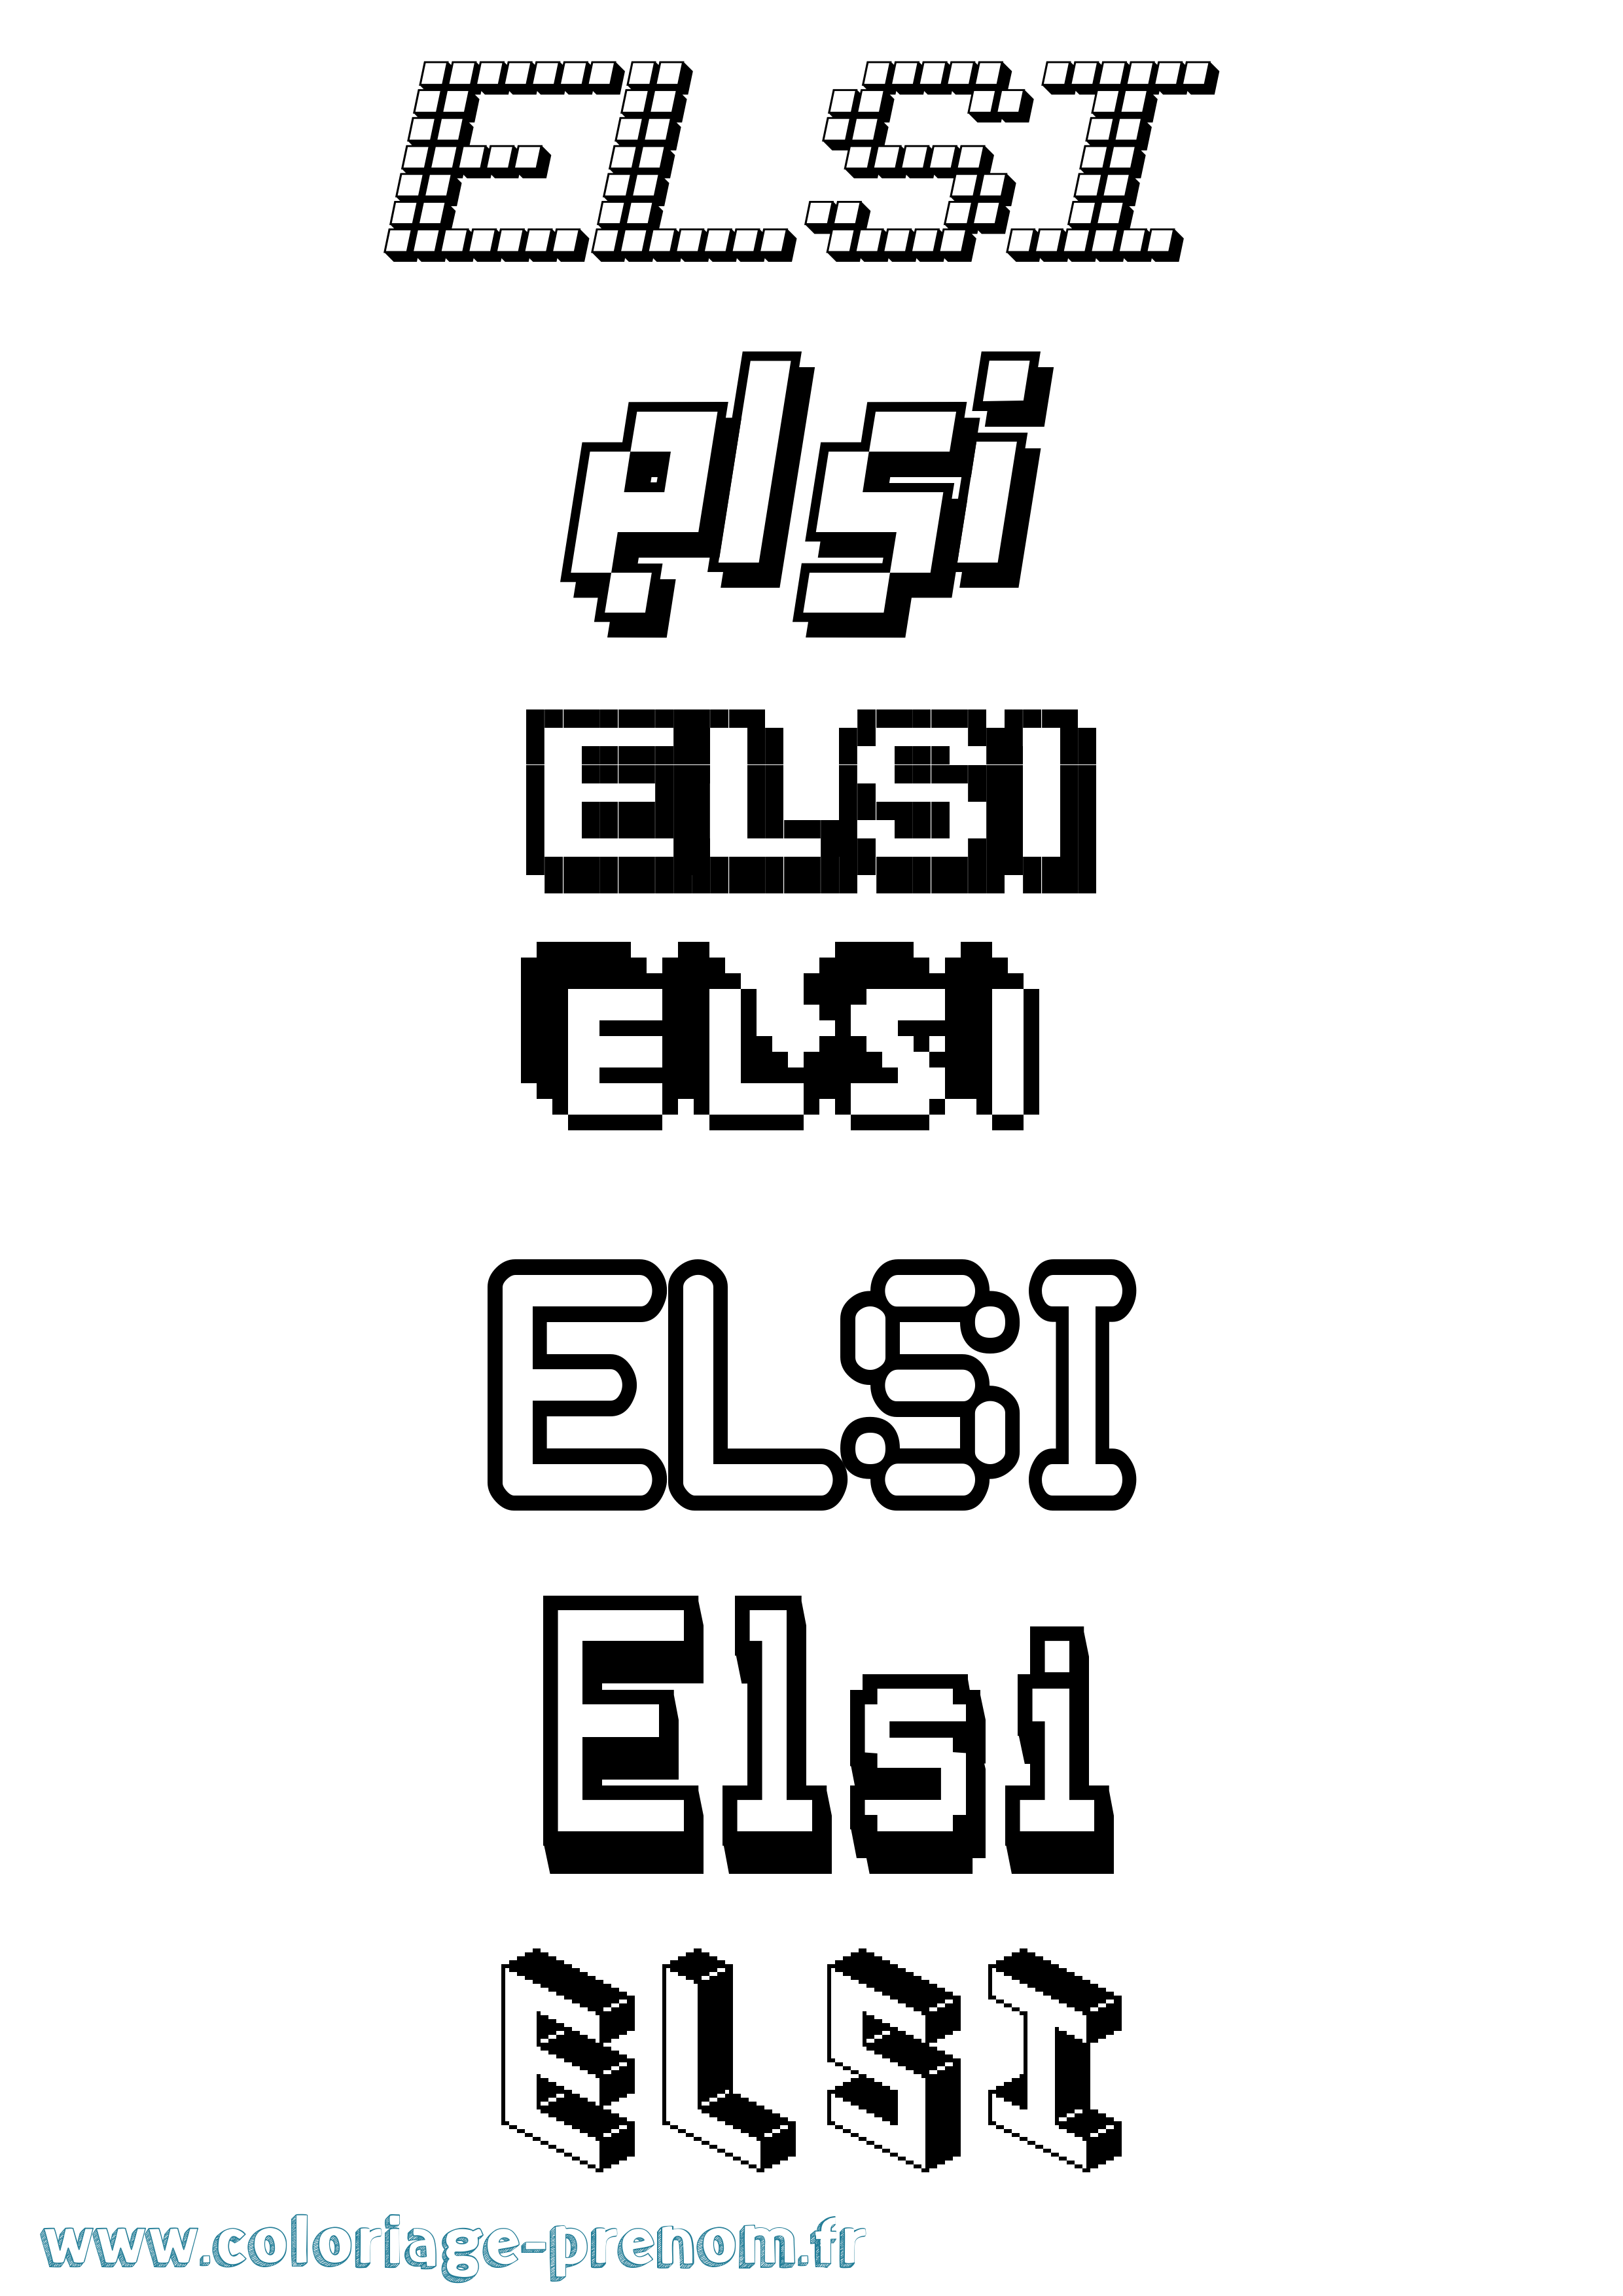 Coloriage prénom Elsi Pixel